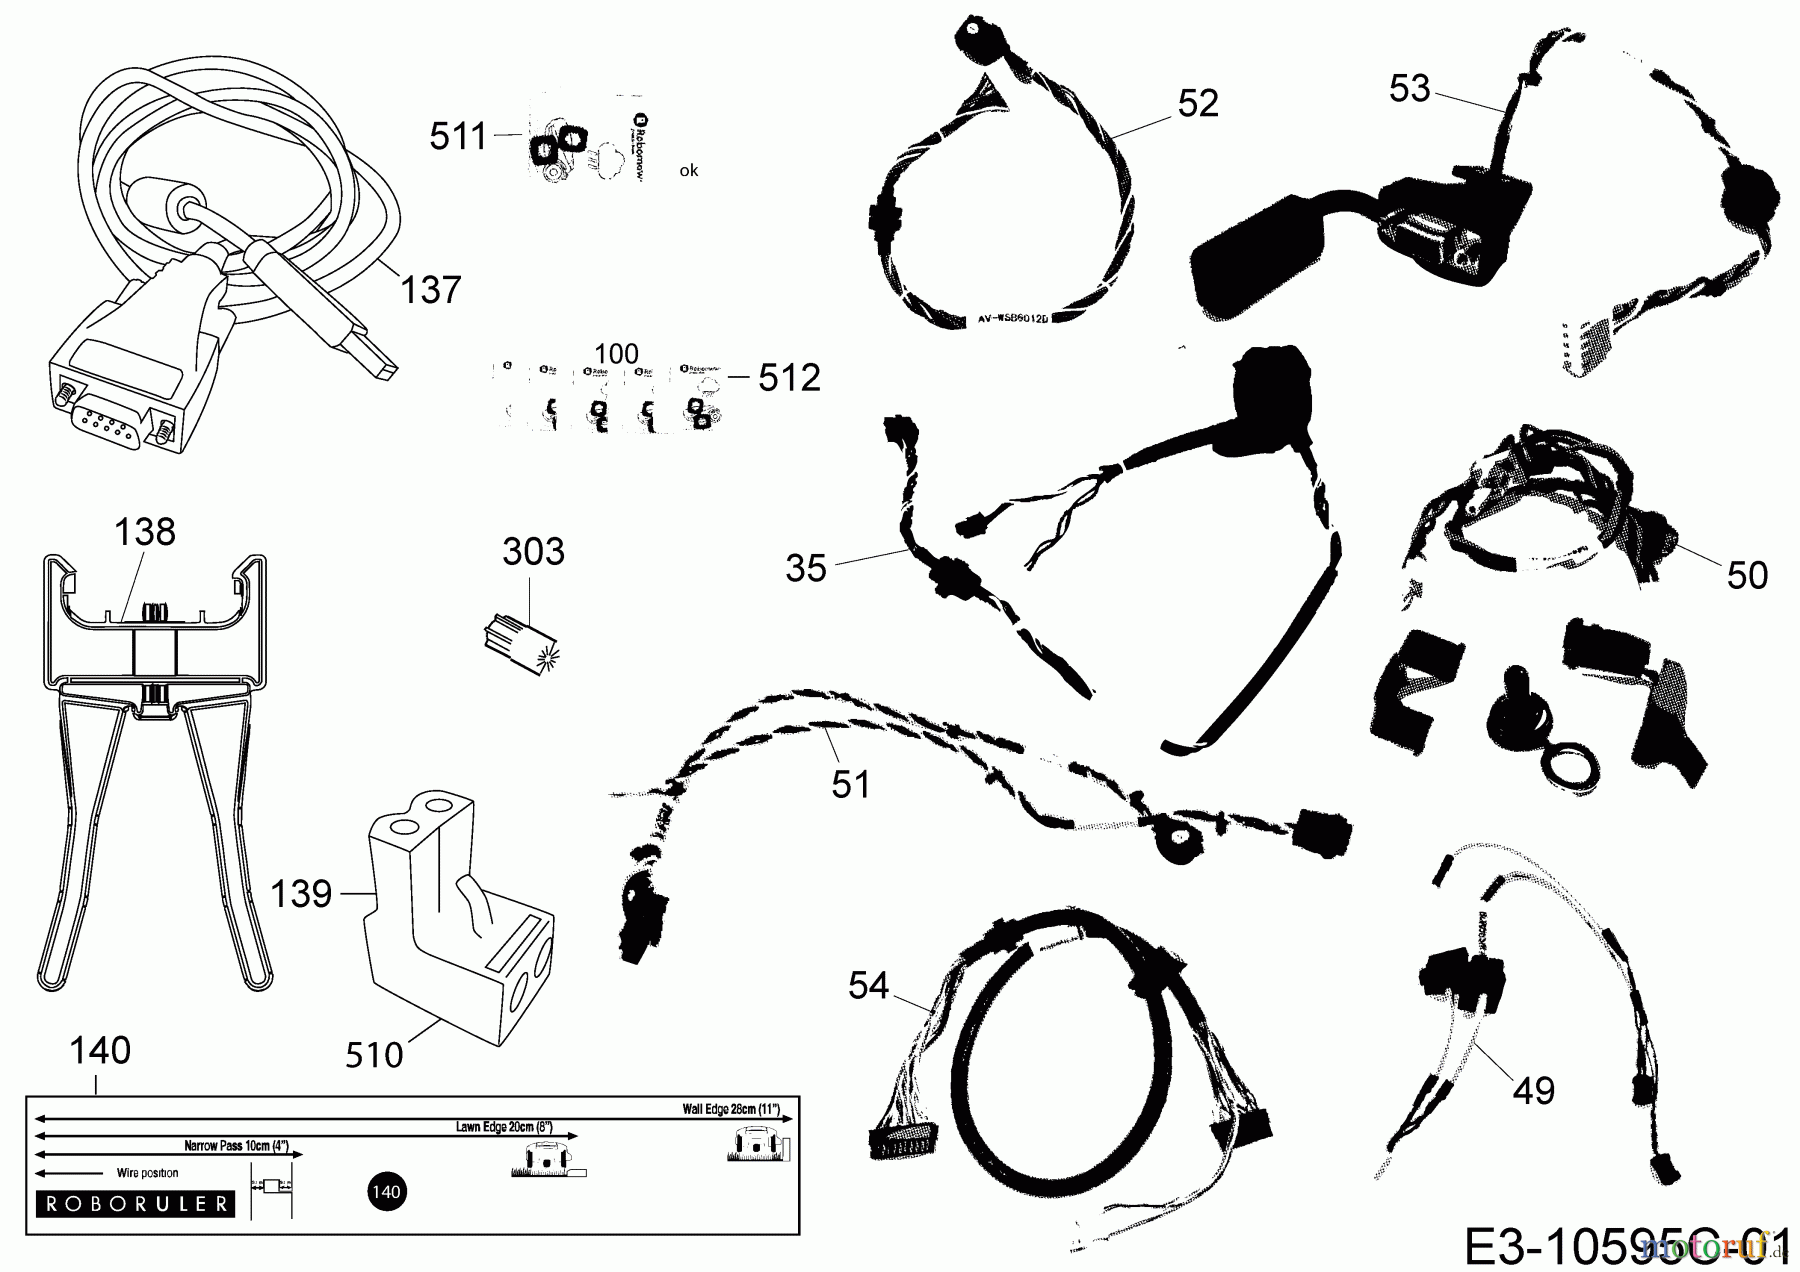  Robomow Mähroboter MS 1800 (Black) PRD6200P1  (2016) Kabel, Kabelanschluß, Regensensor, Werkzeug